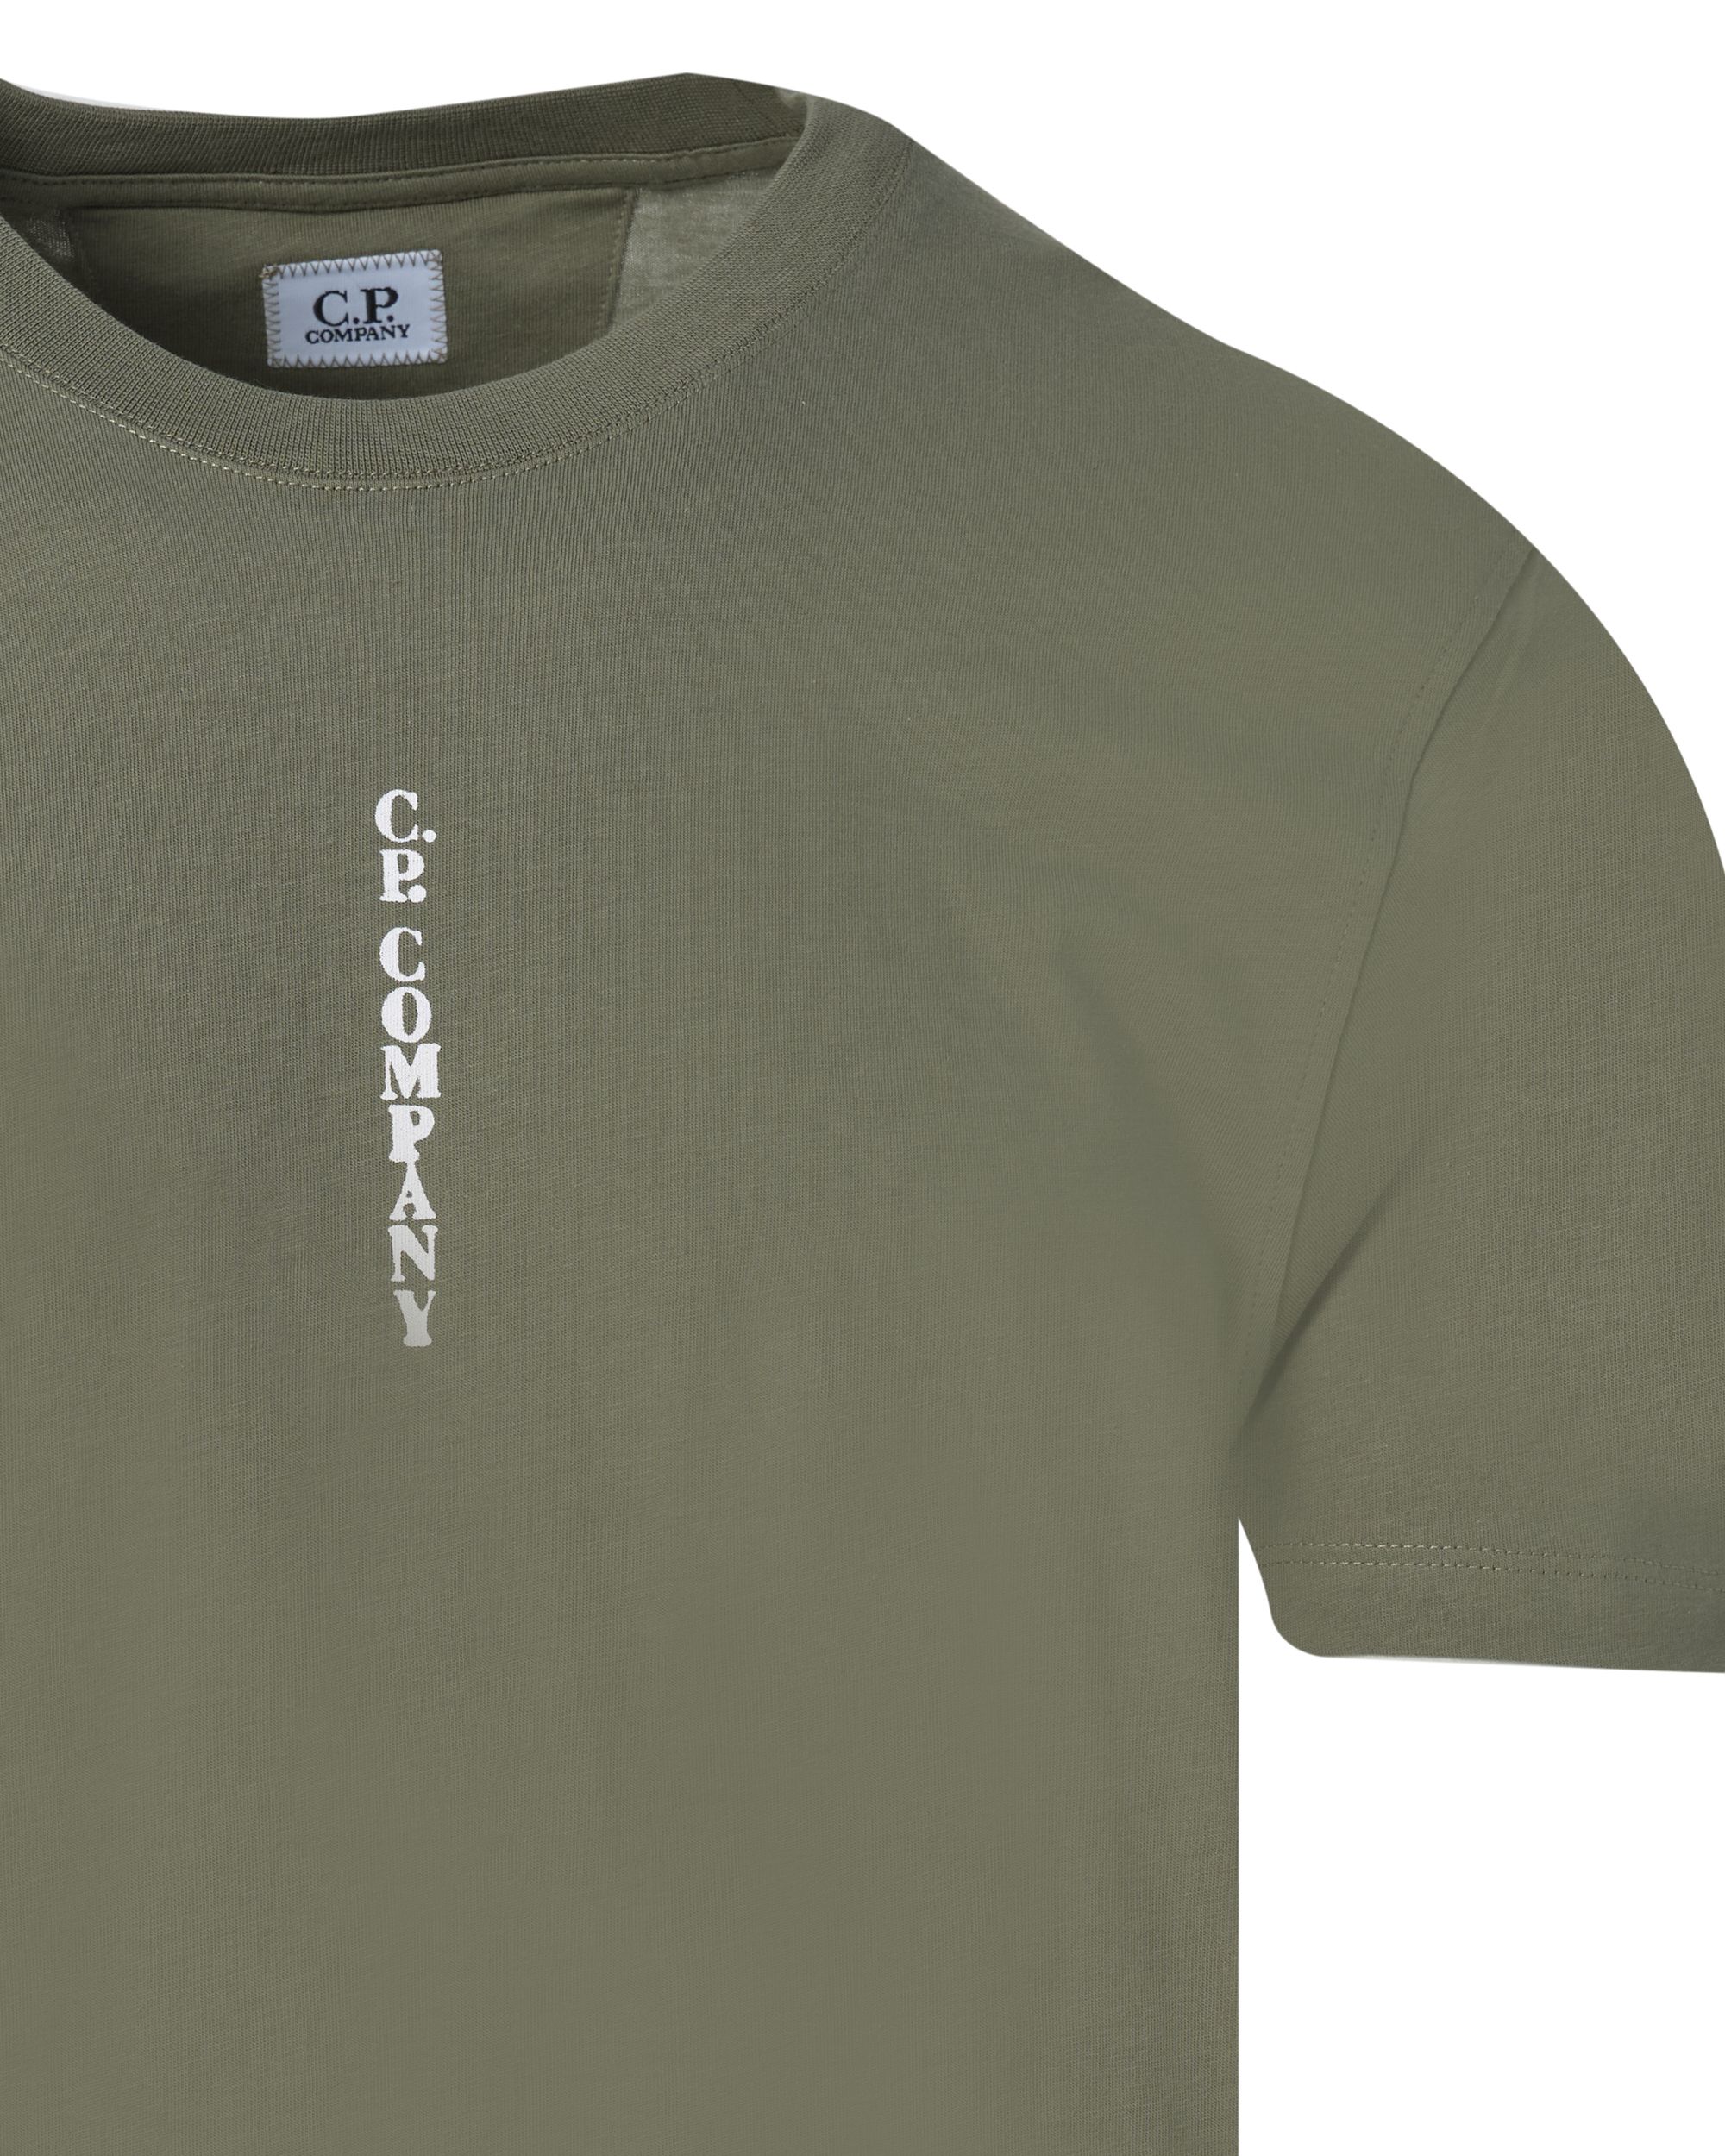 C.P Company T-shirt KM Groen 082110-001-L